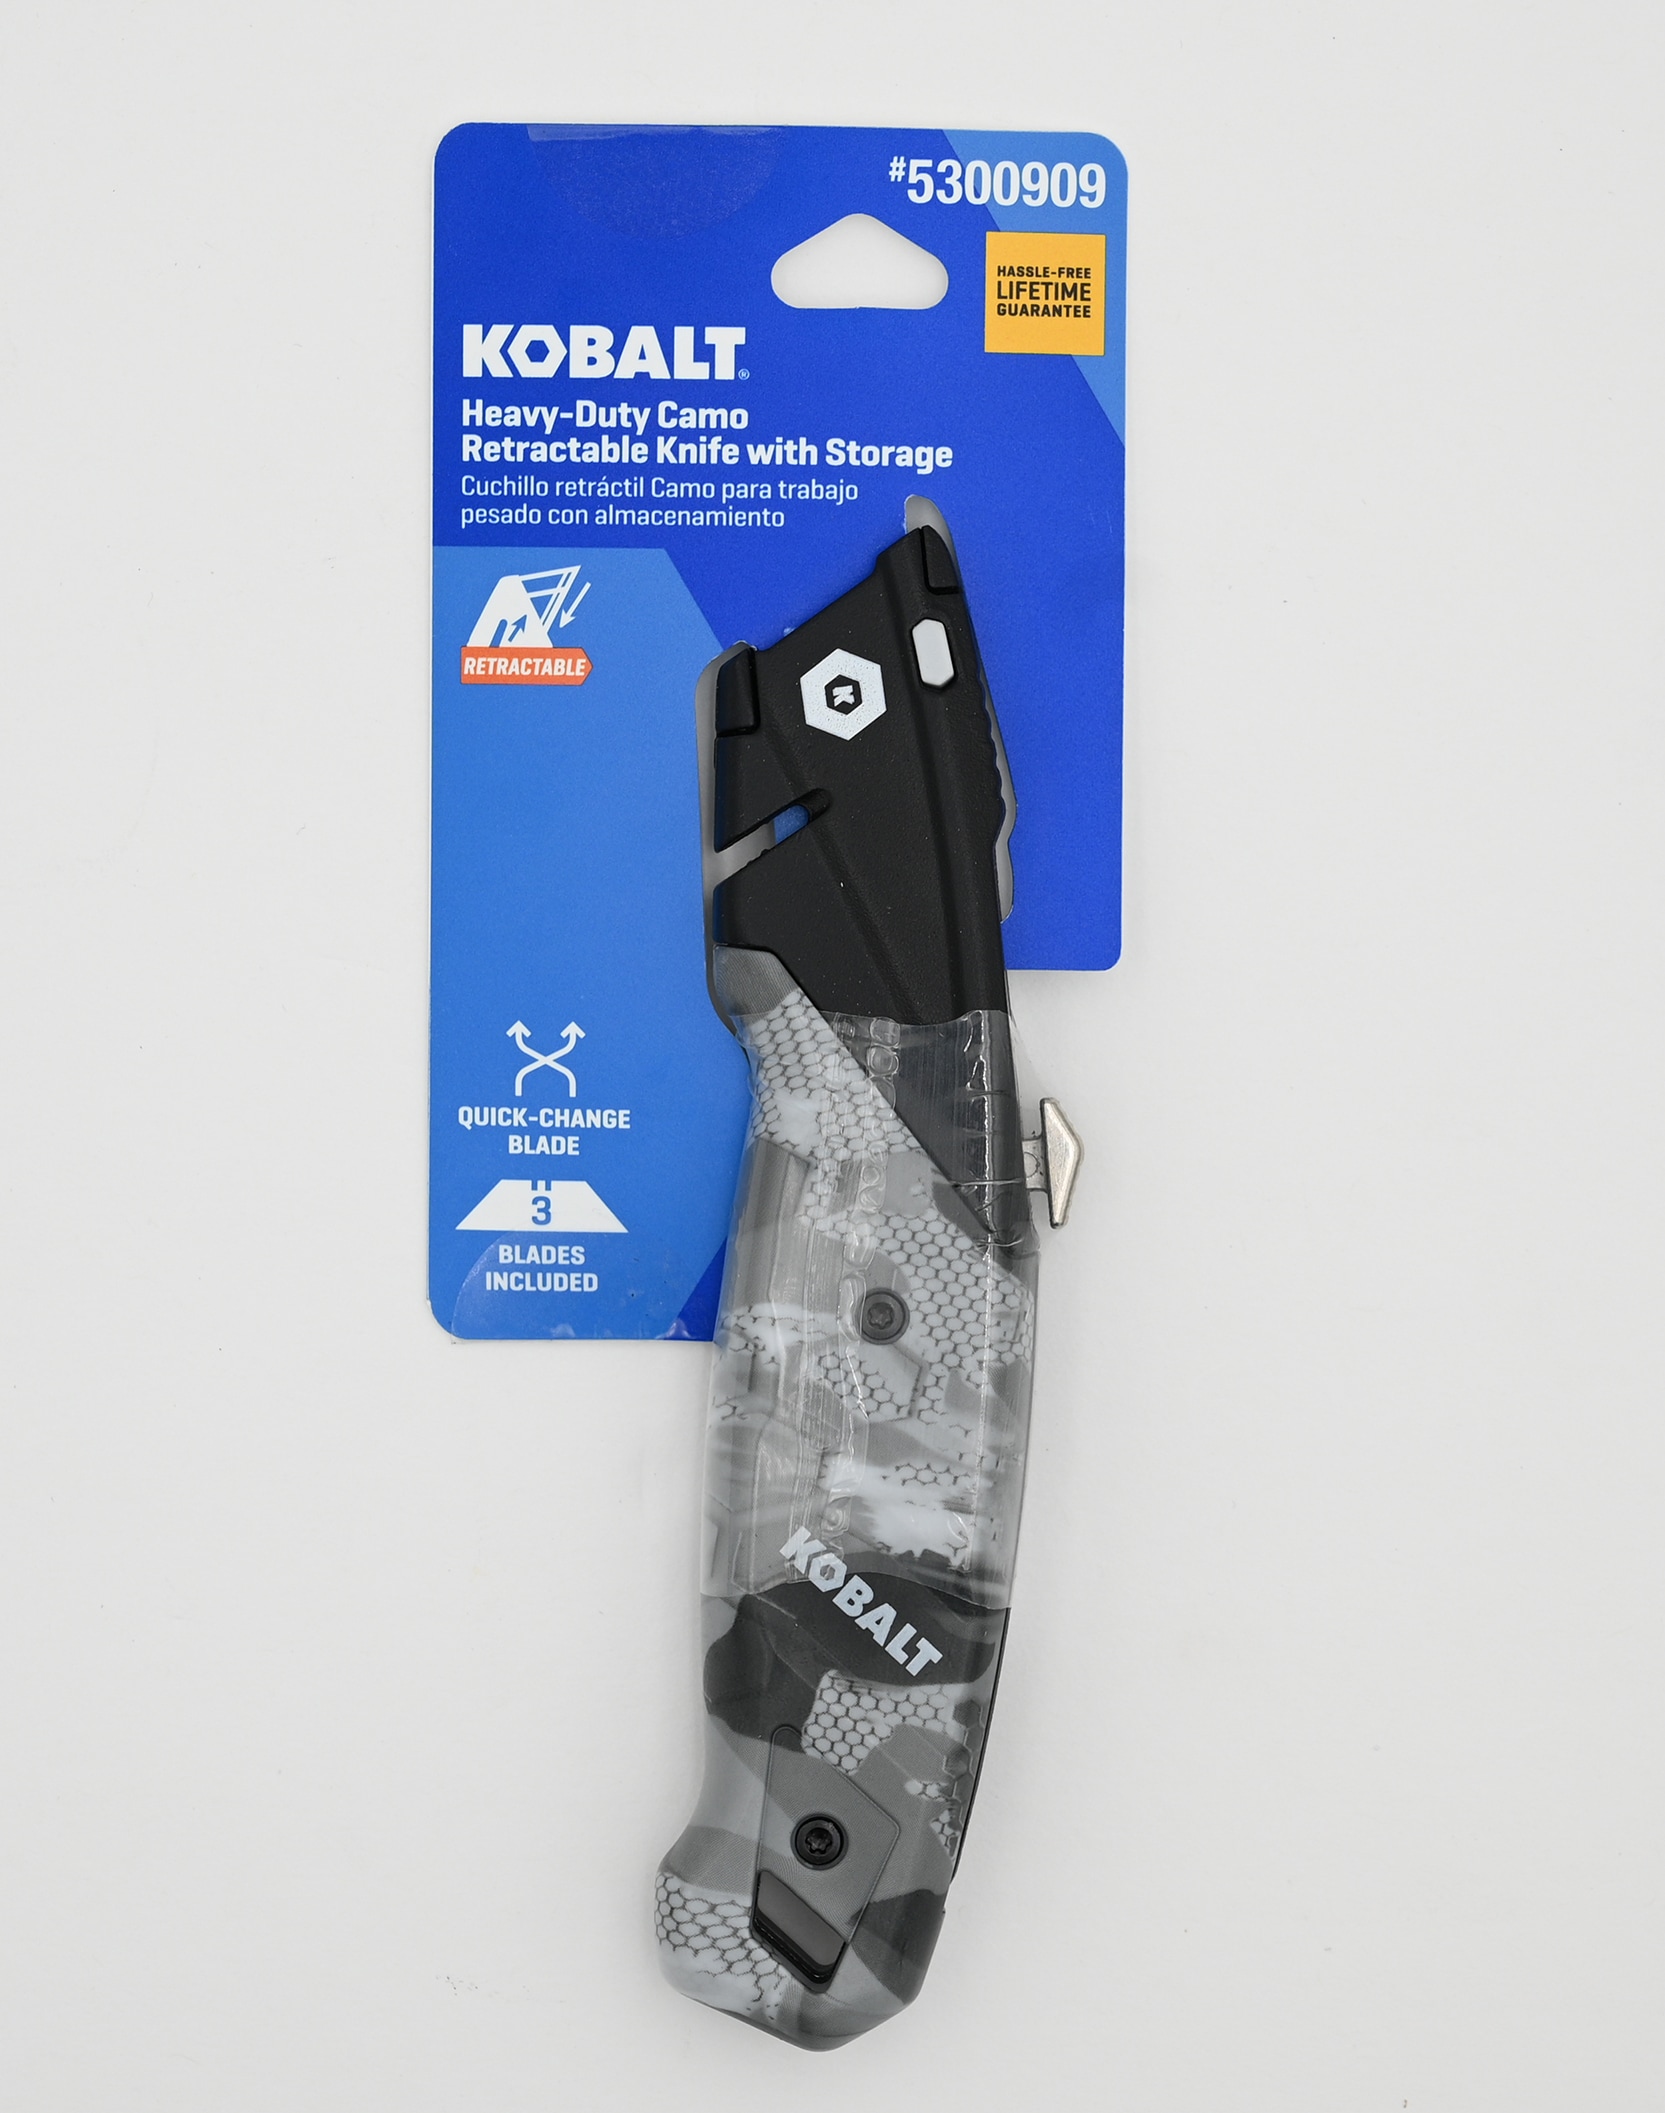 Kobalt Heavy Duty 18Mm 3-Blade Utility Knife with On Tool Blade